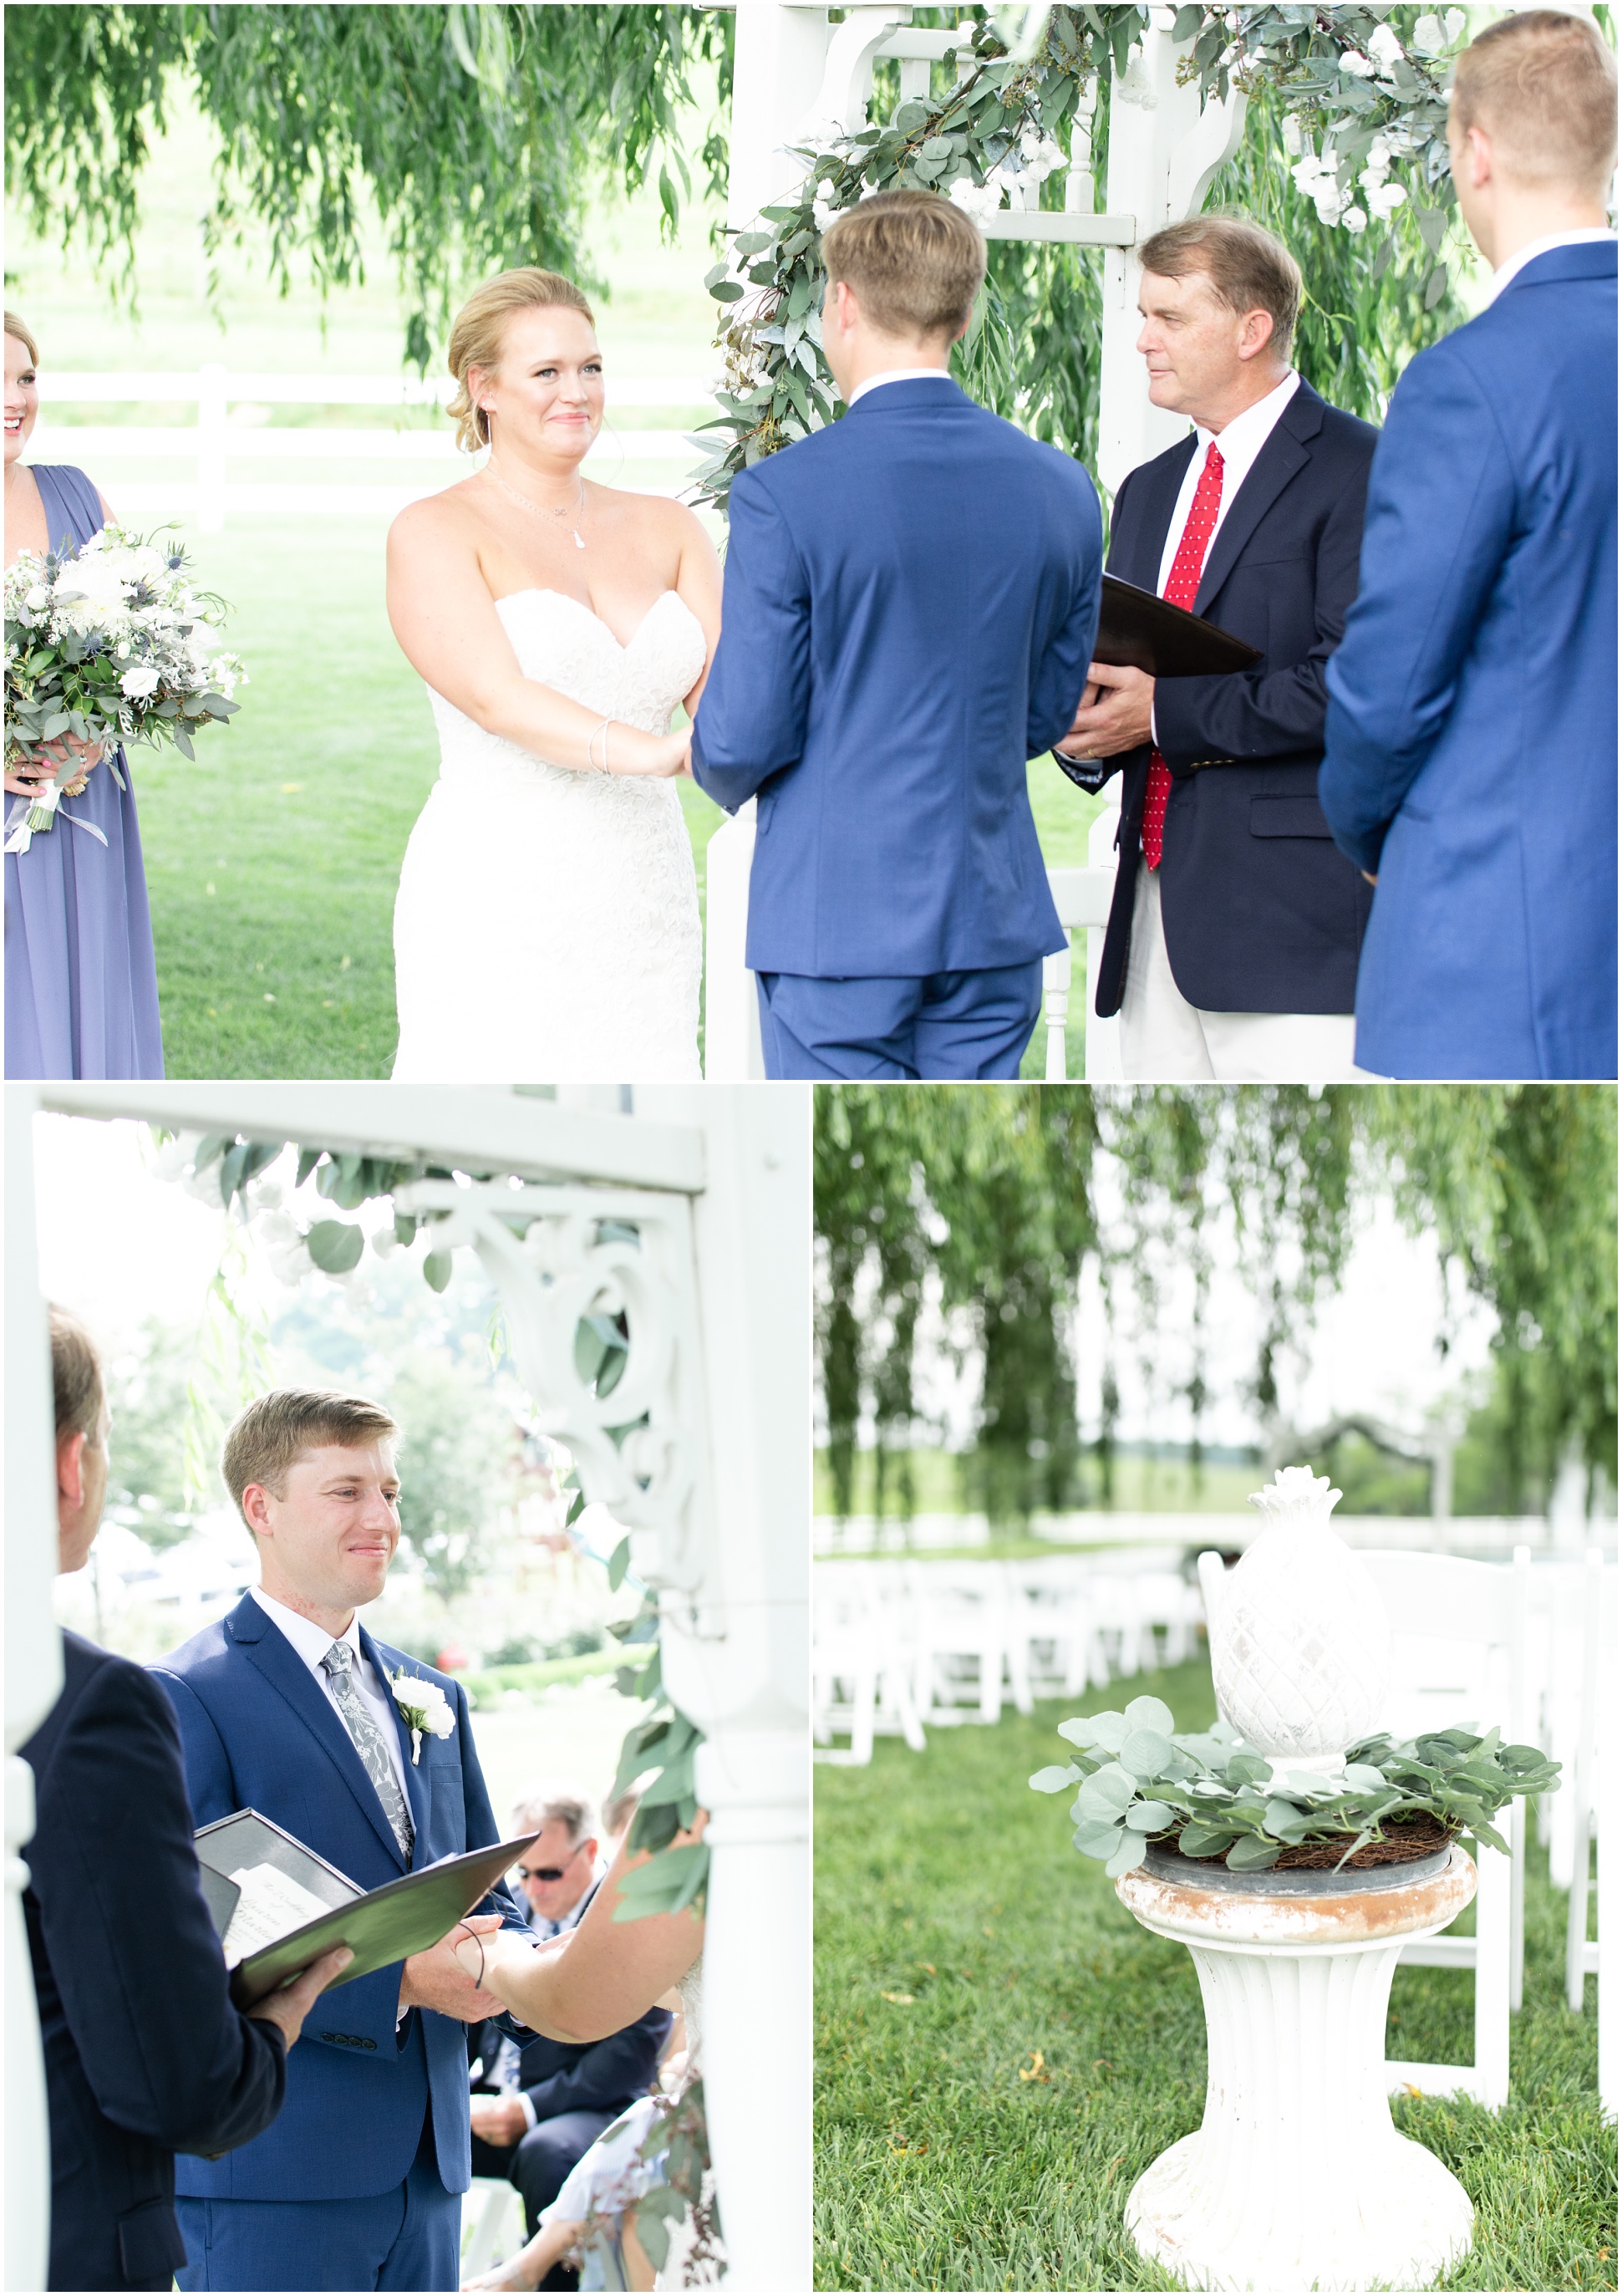 ceremony photos from #notjustsummerlove wedding at pond view farm